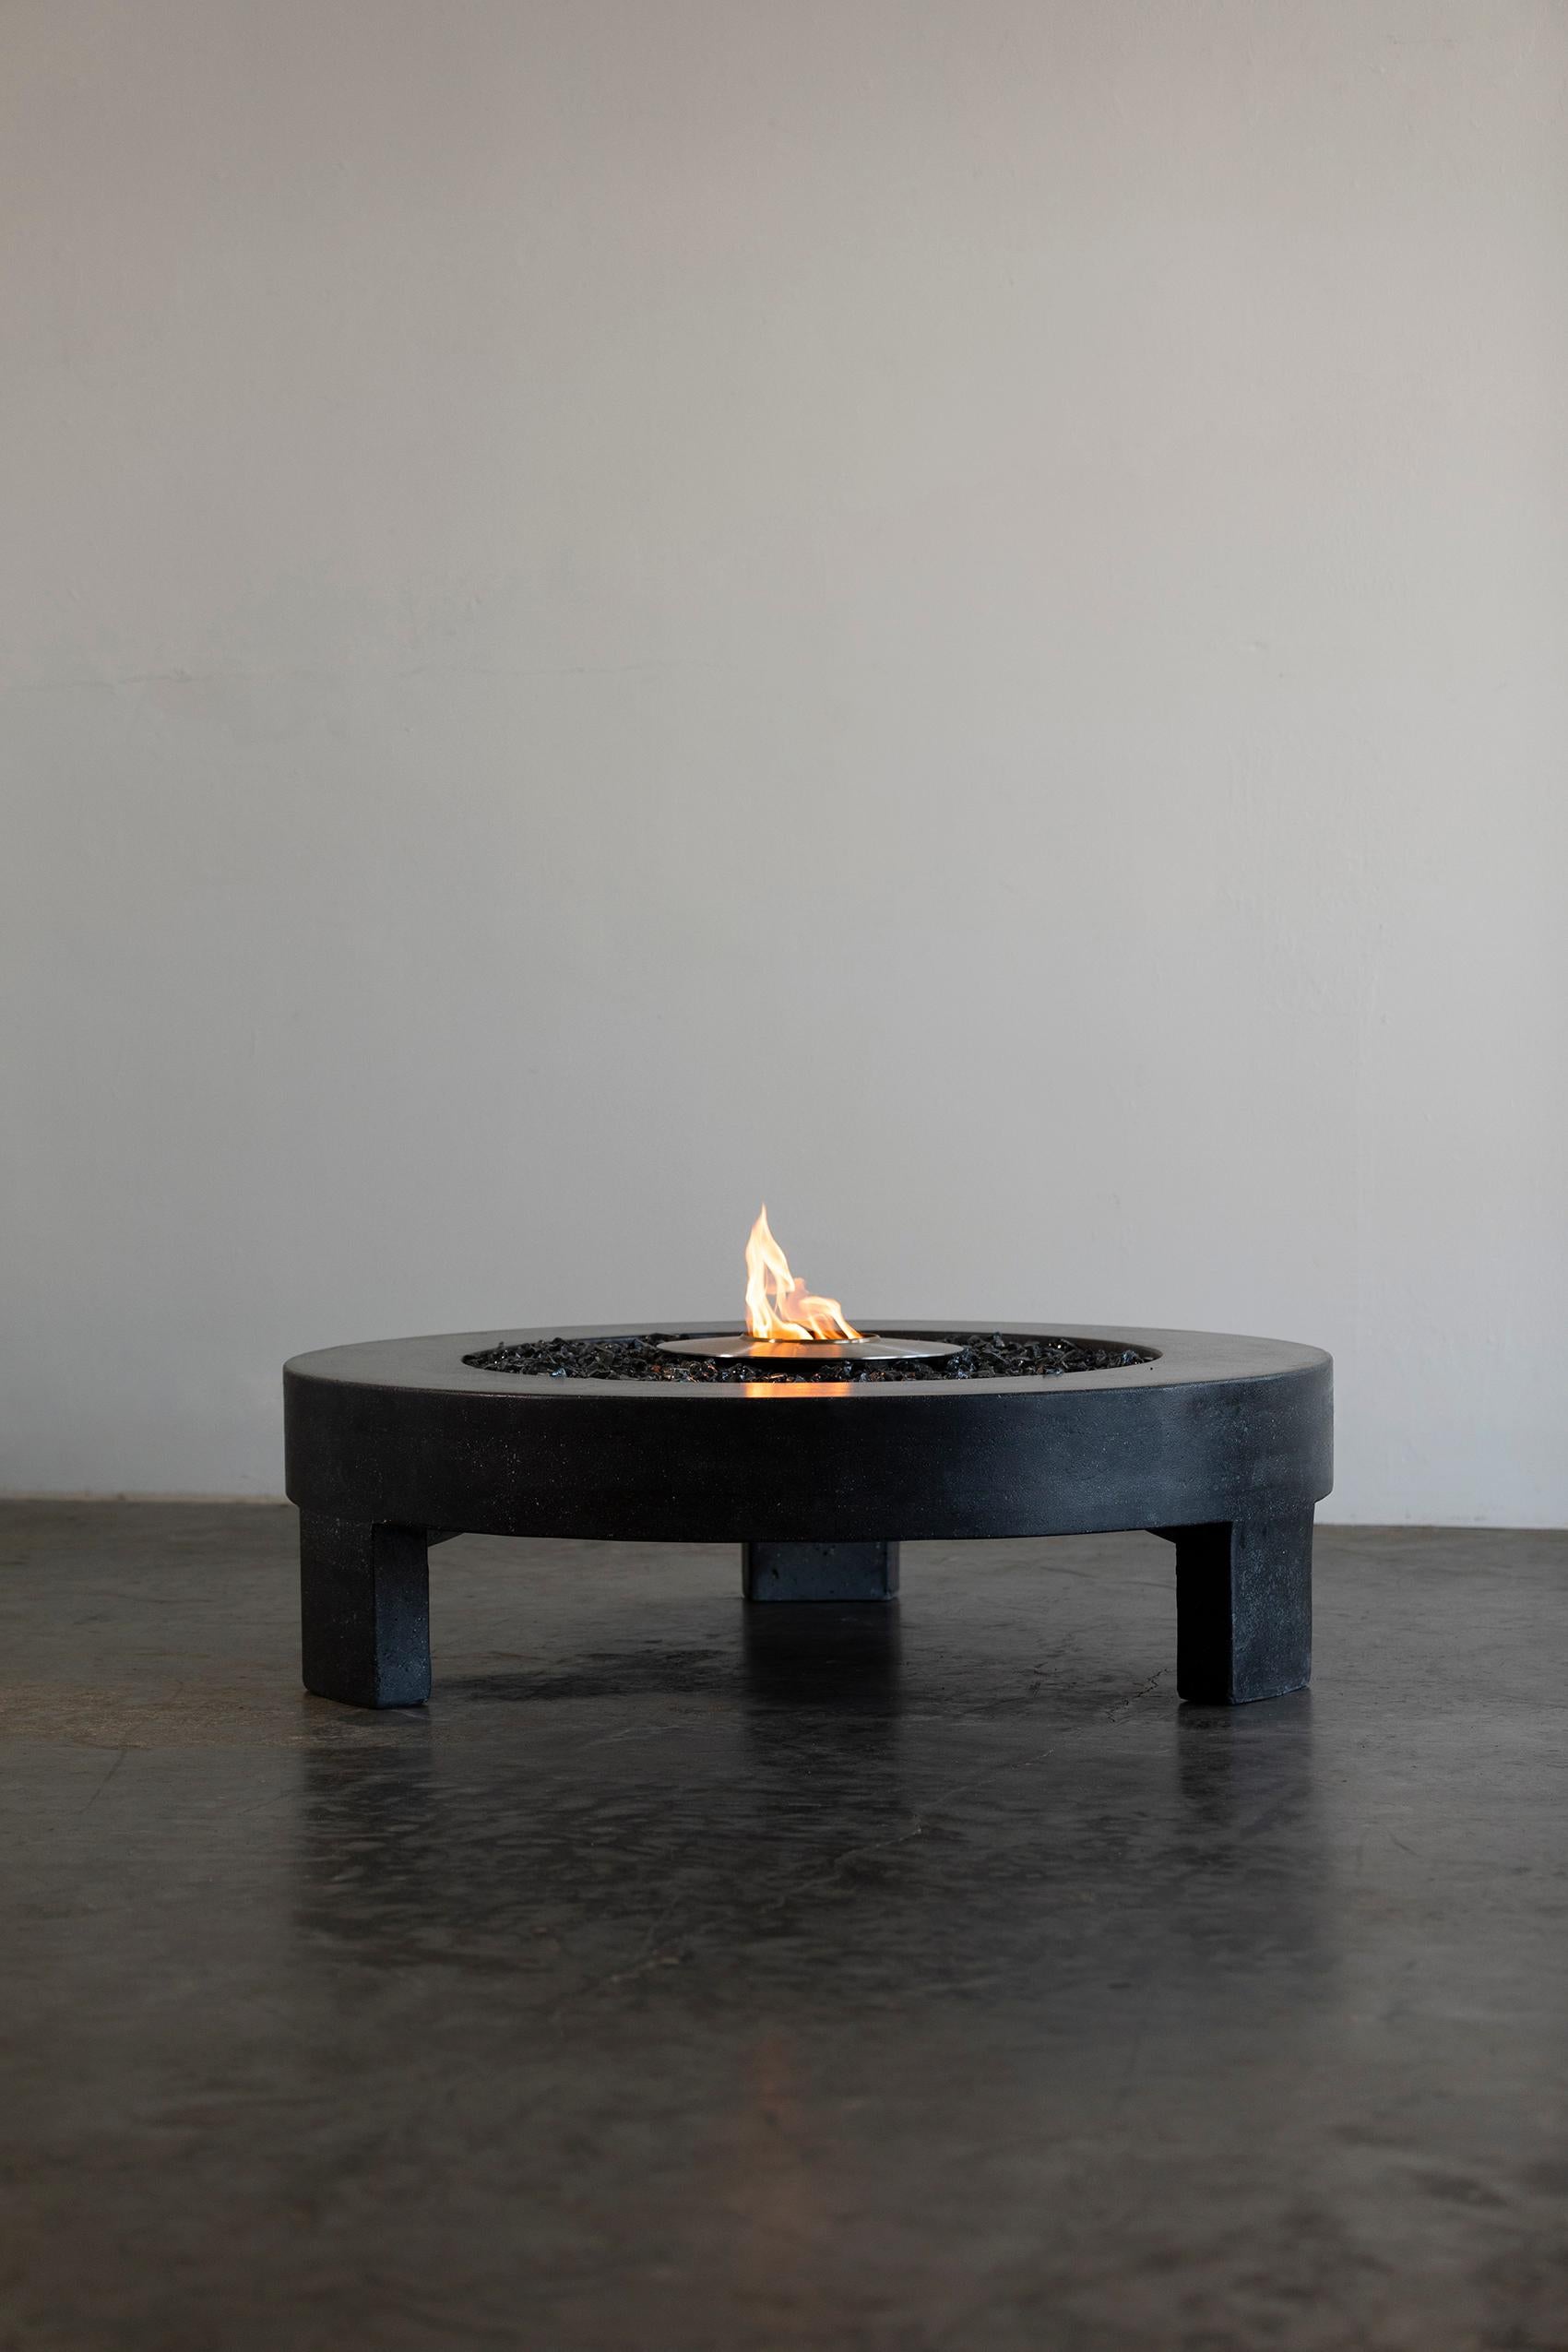 James de Wulf 3-Legged Concrete Fire Table